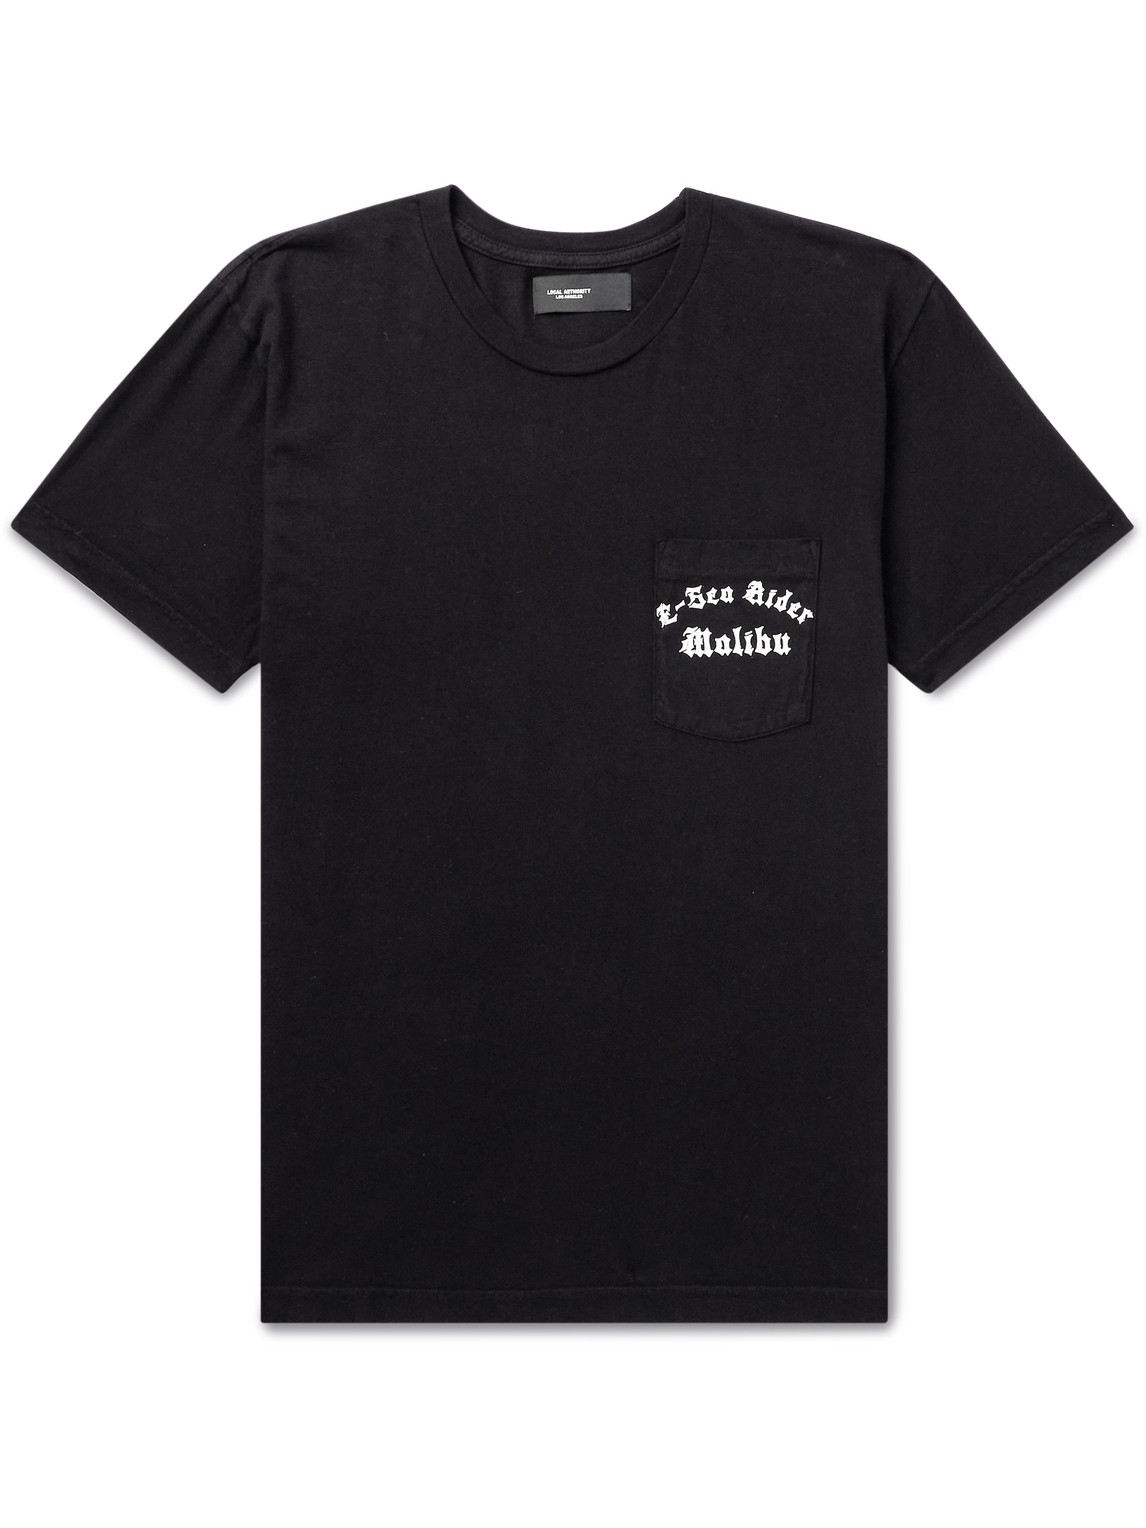 E-Sea Rider Printed Cotton-Jersey T-Shirt